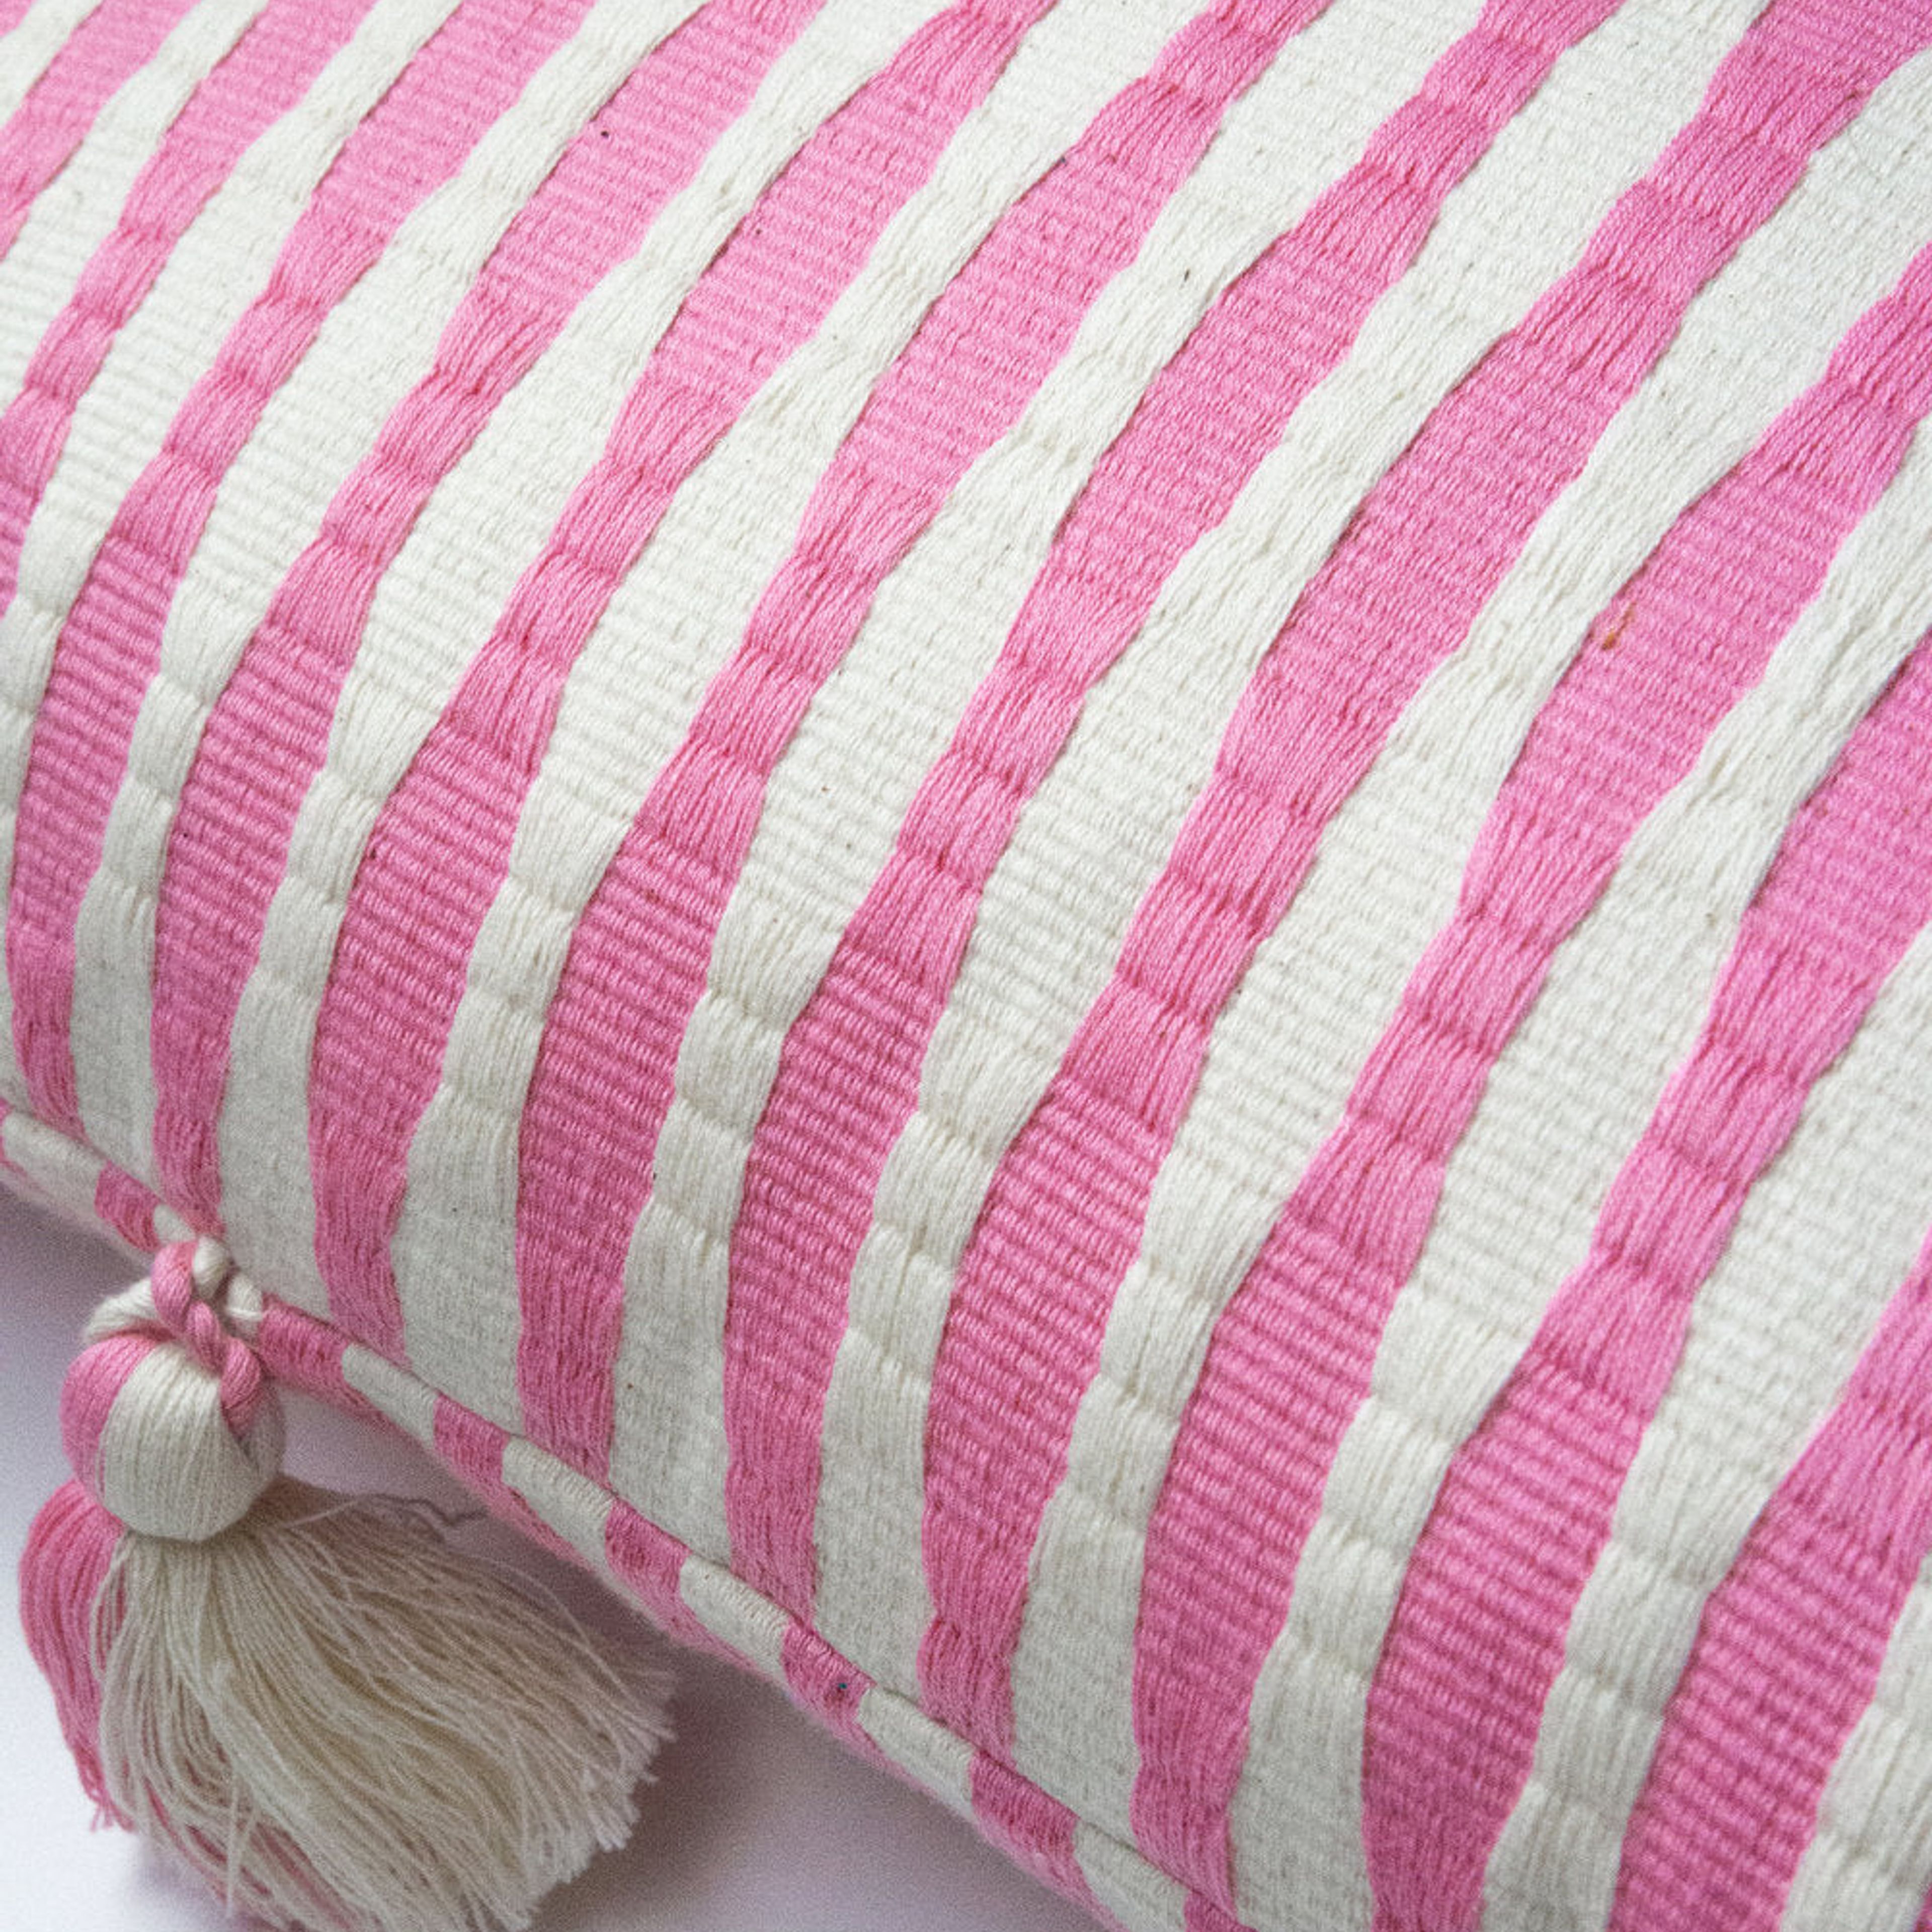 Antigua Pillow - Bubblegum Pink Striped